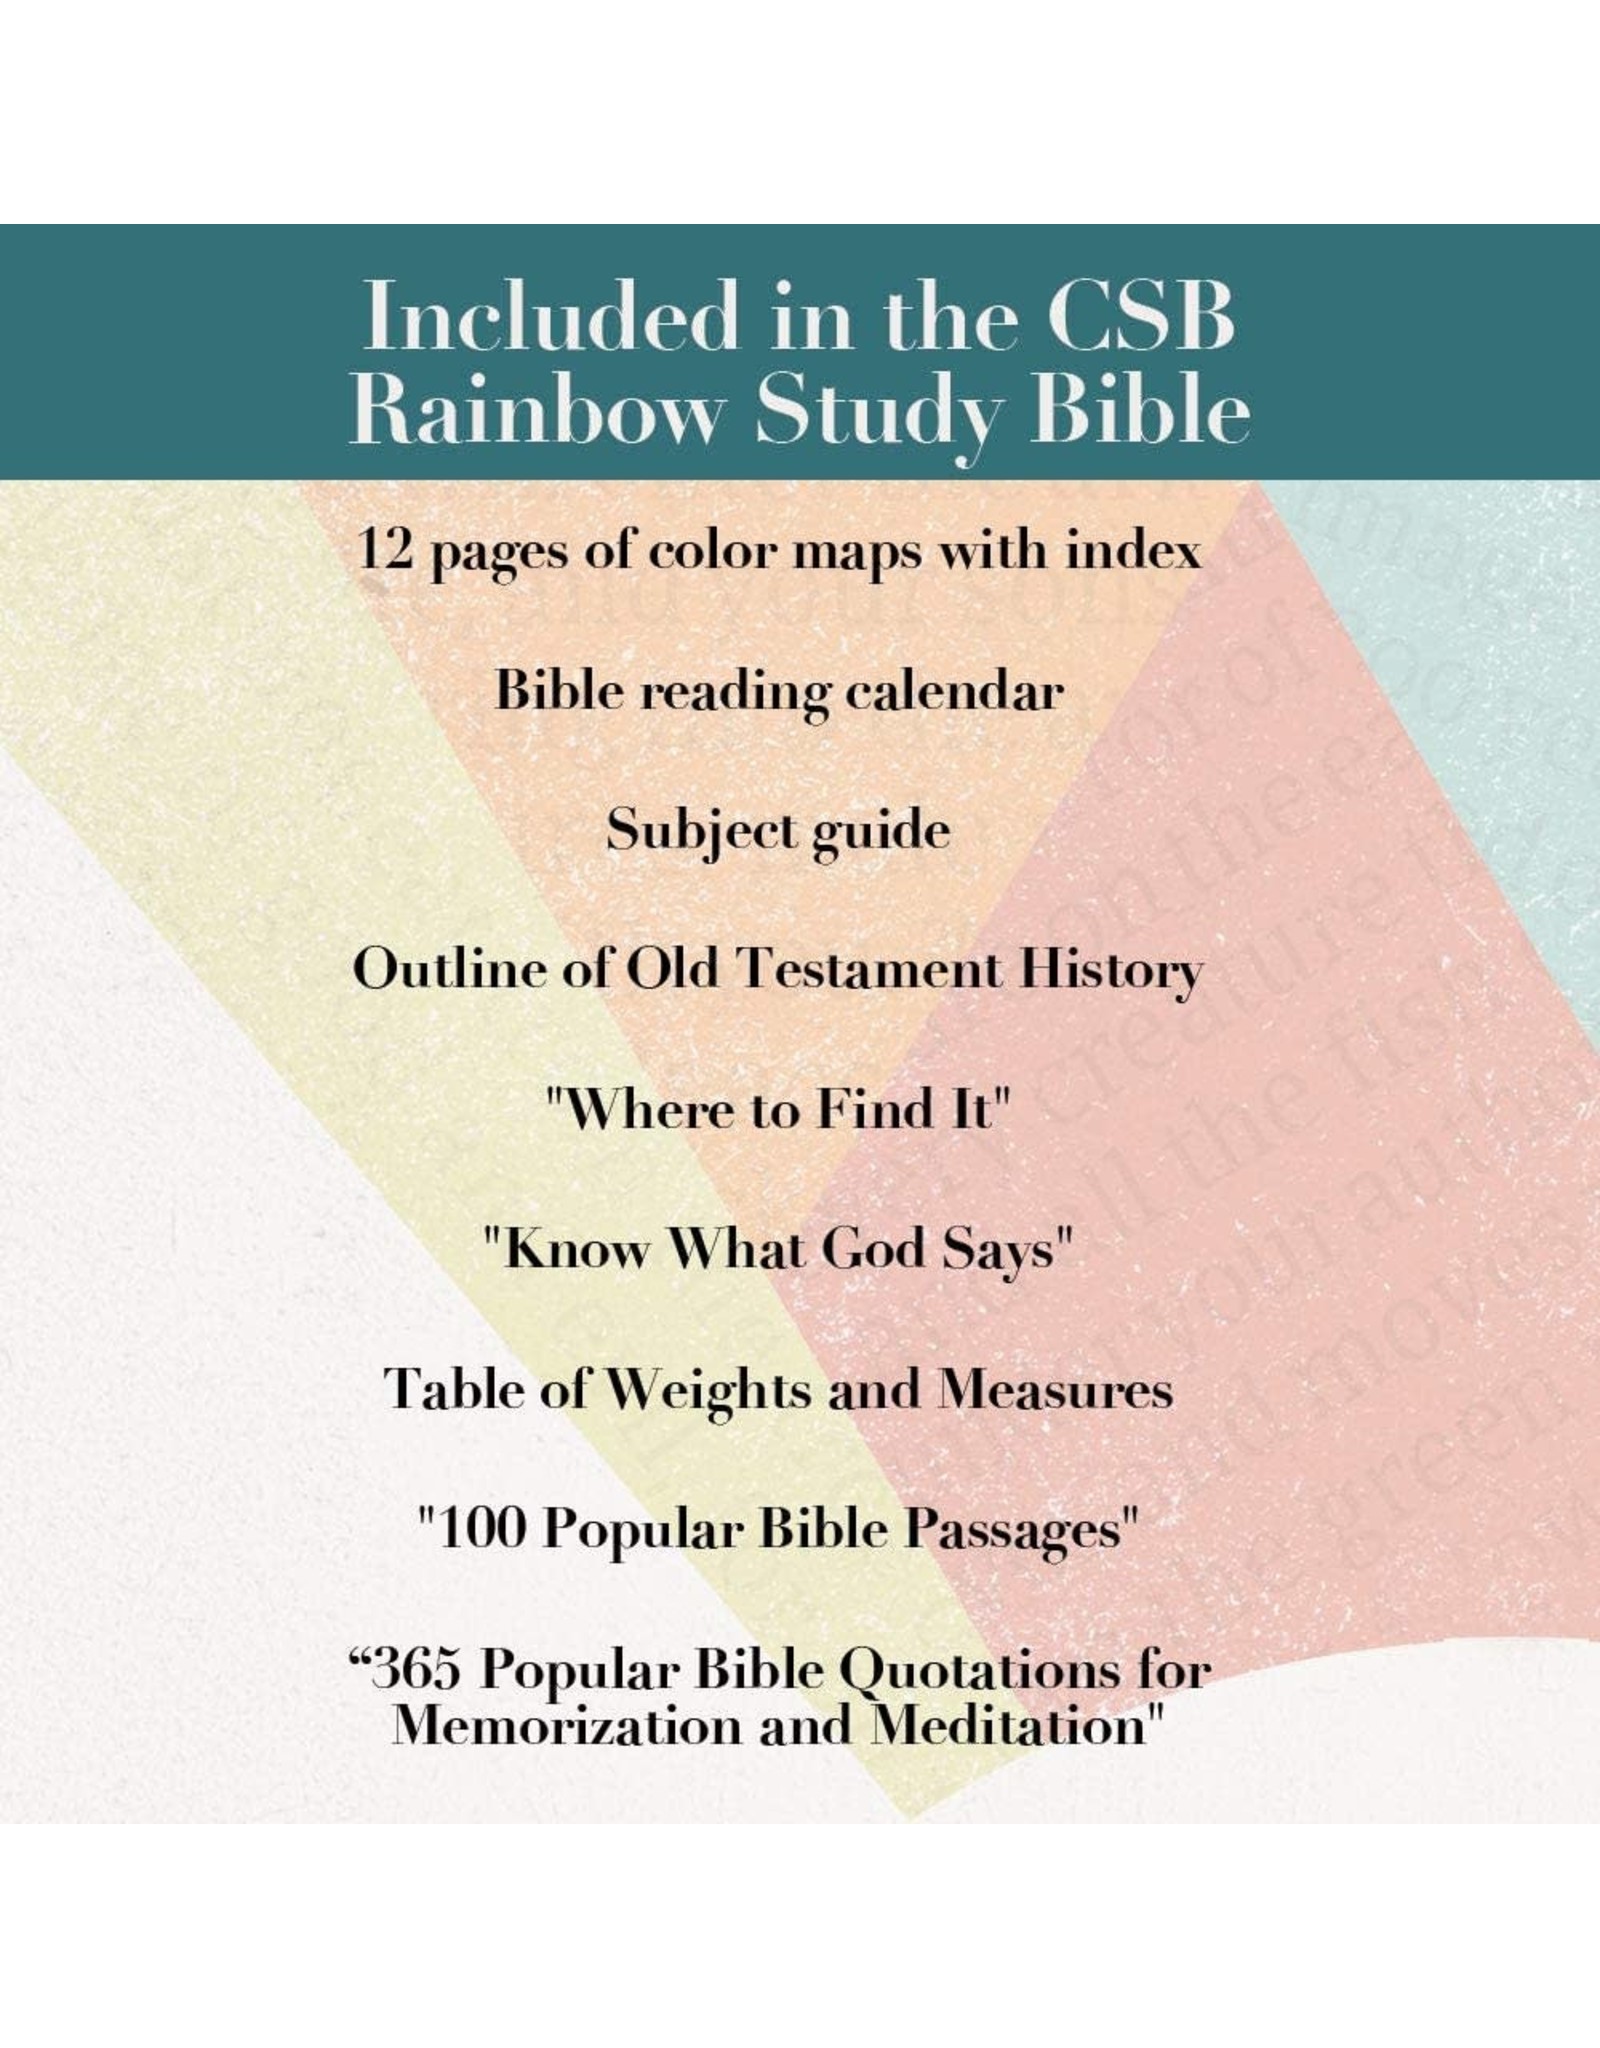 CSB (Christian Standard) Rainbow Study Bible